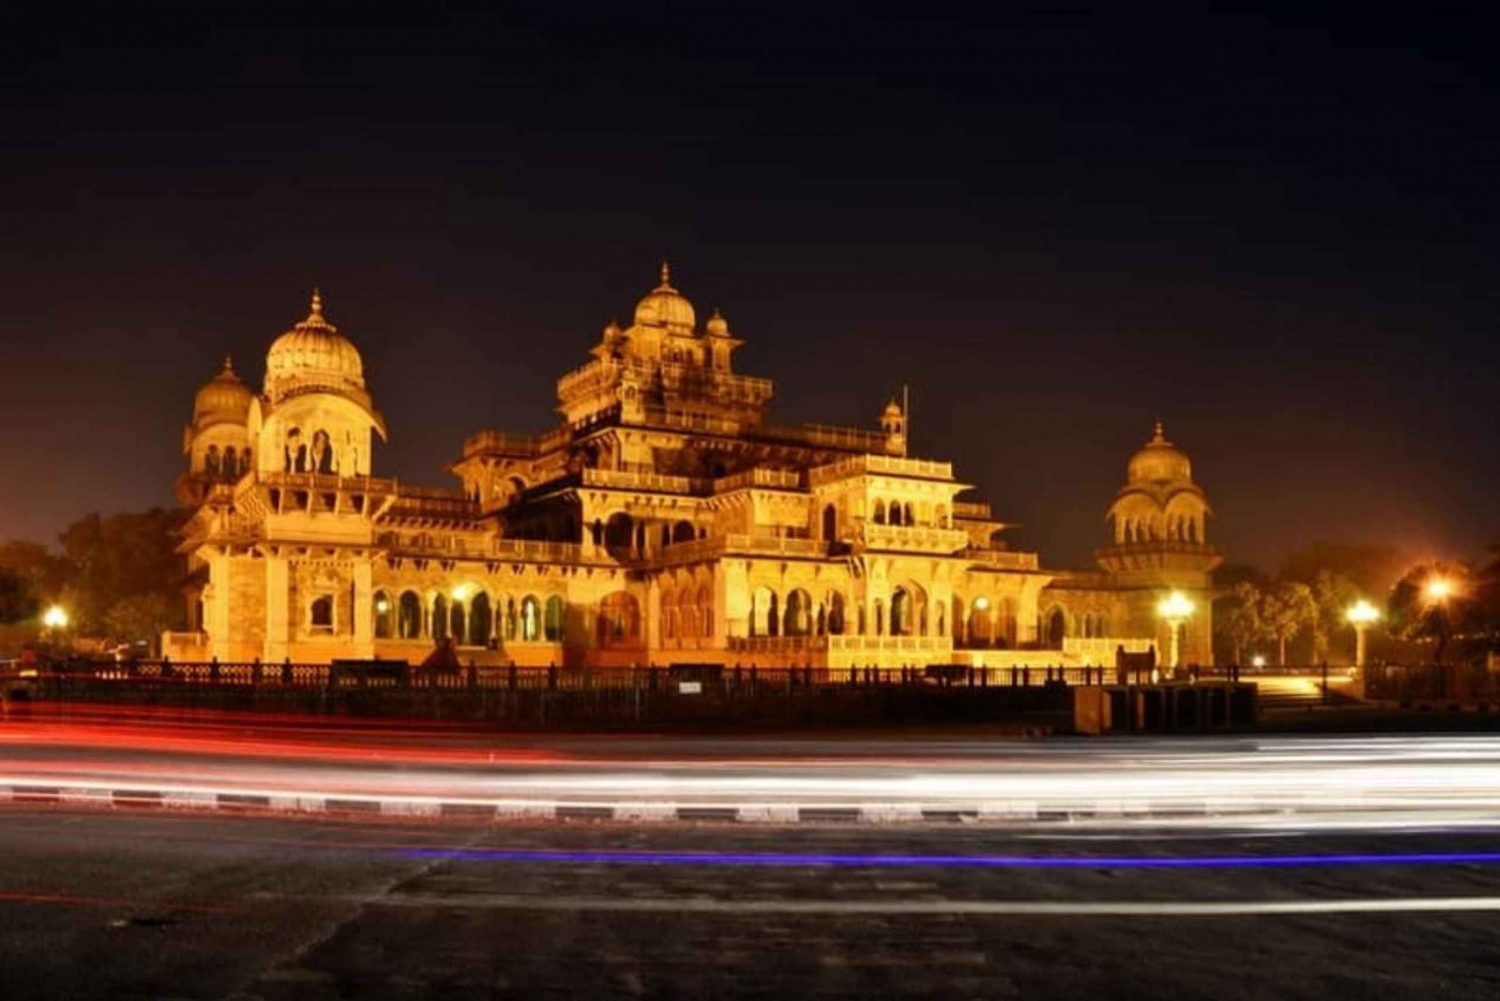 Natttur i Jaipur: 3 TIMER